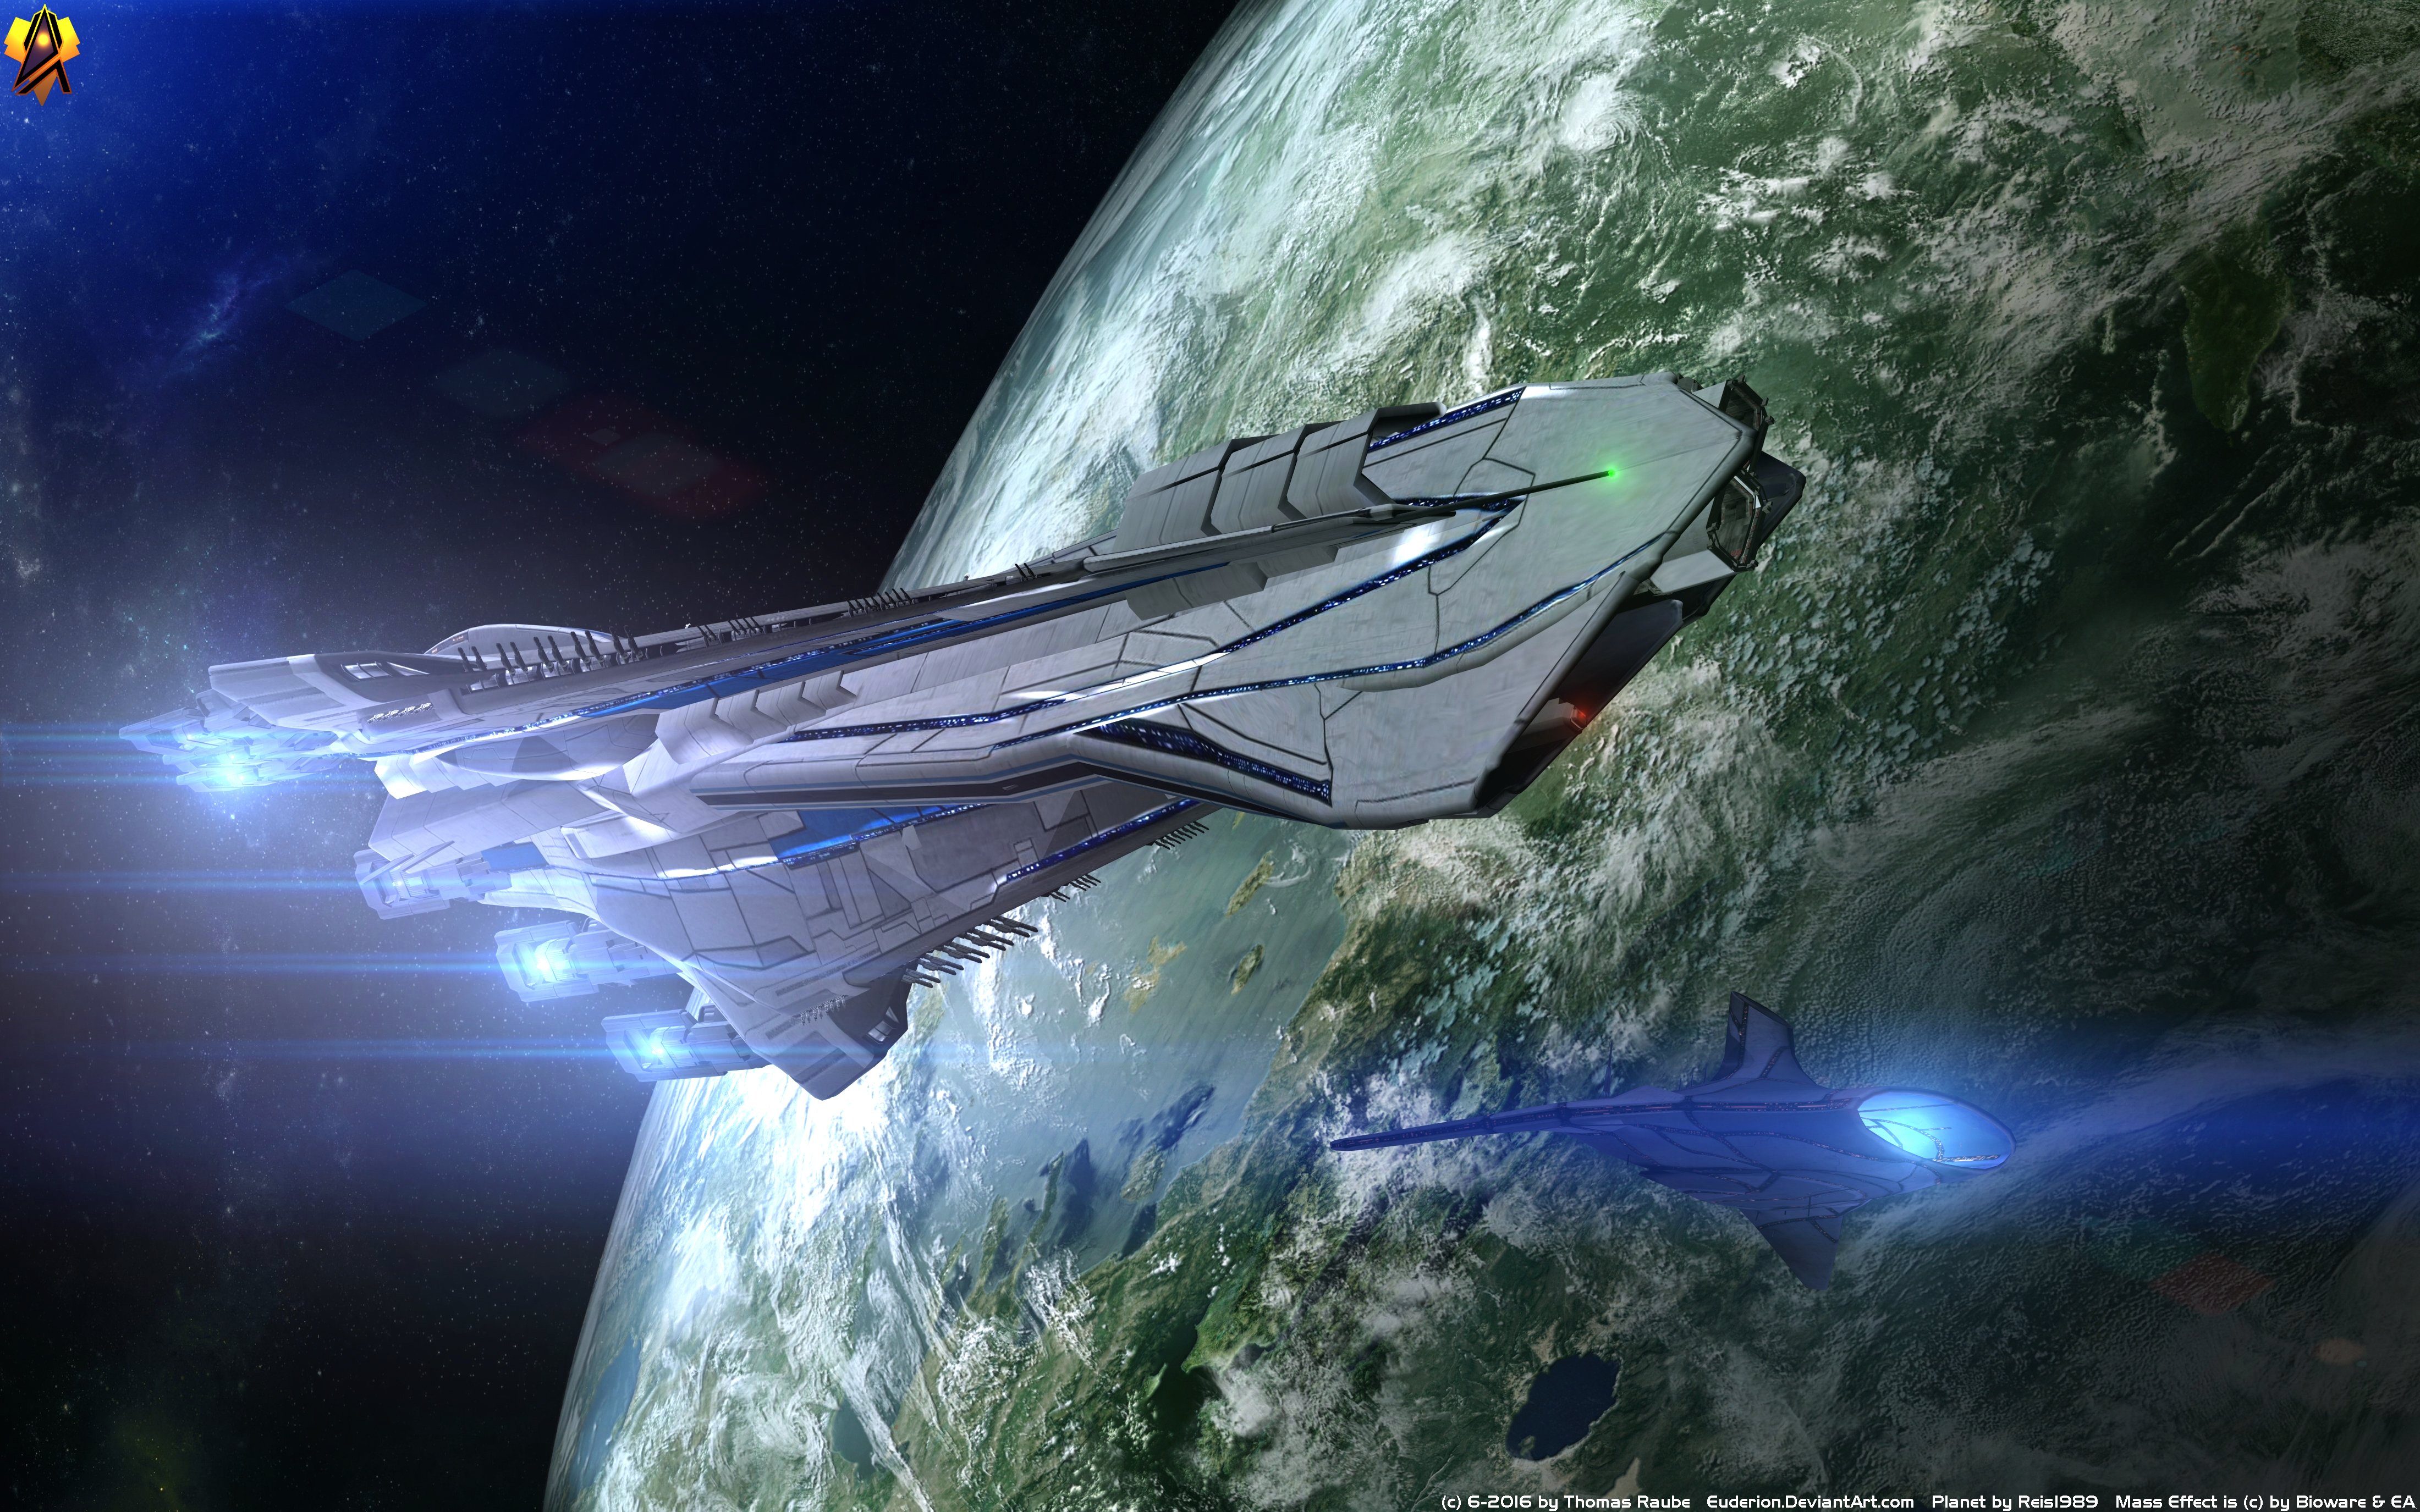 Mass Effect Mass Effect 3 Starship Spaceship 4400x2750